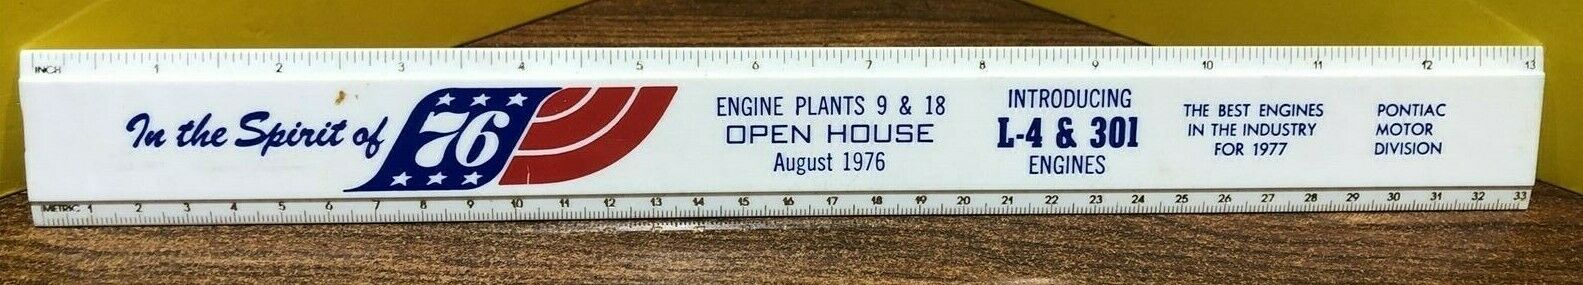 Vintage 1976 Pontiac Motor Division Advertising Ruler